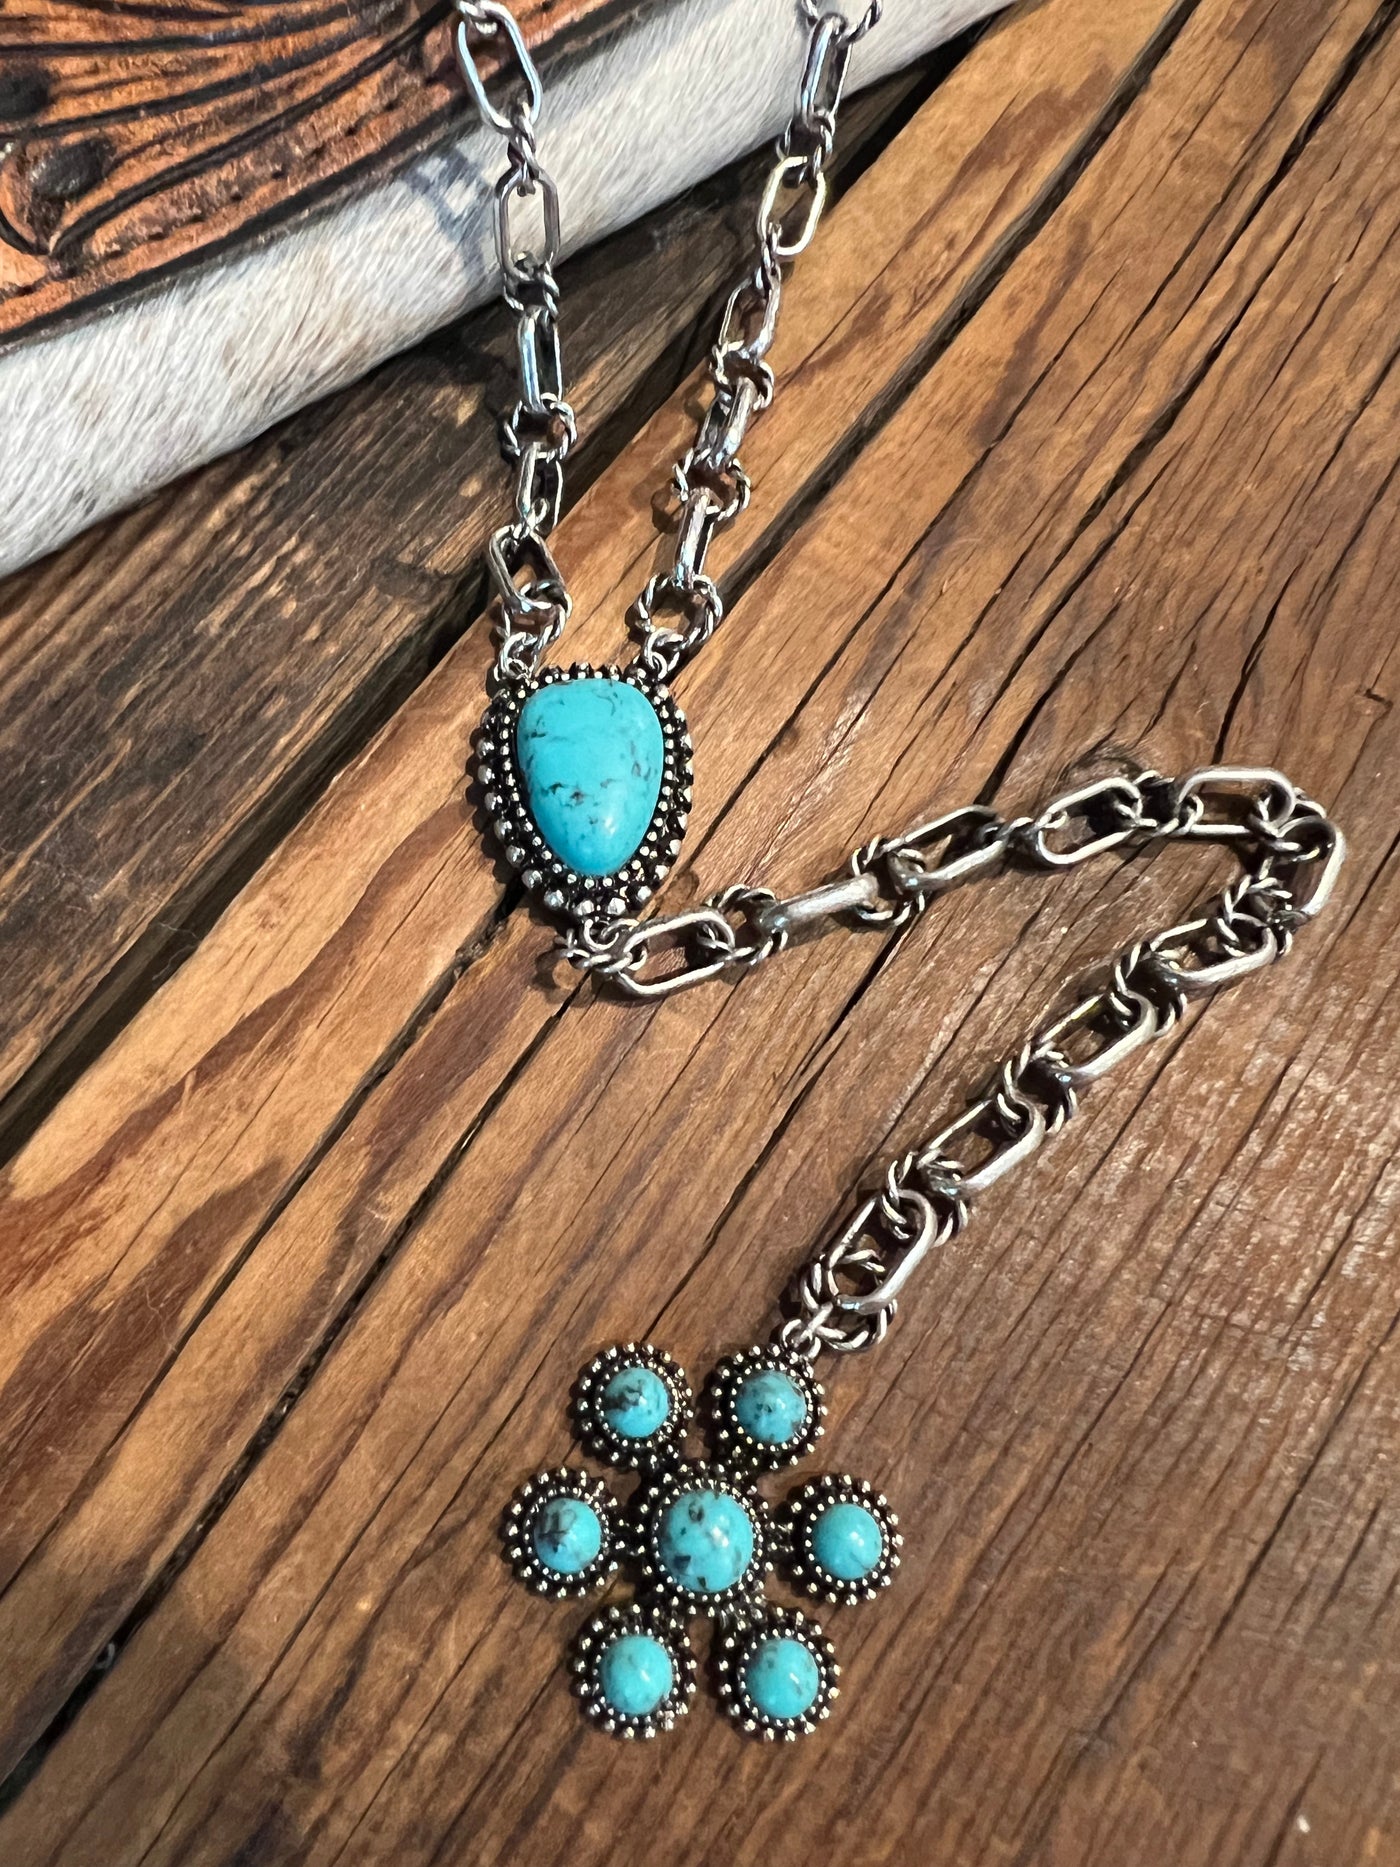 Turquoise Lariat Necklace